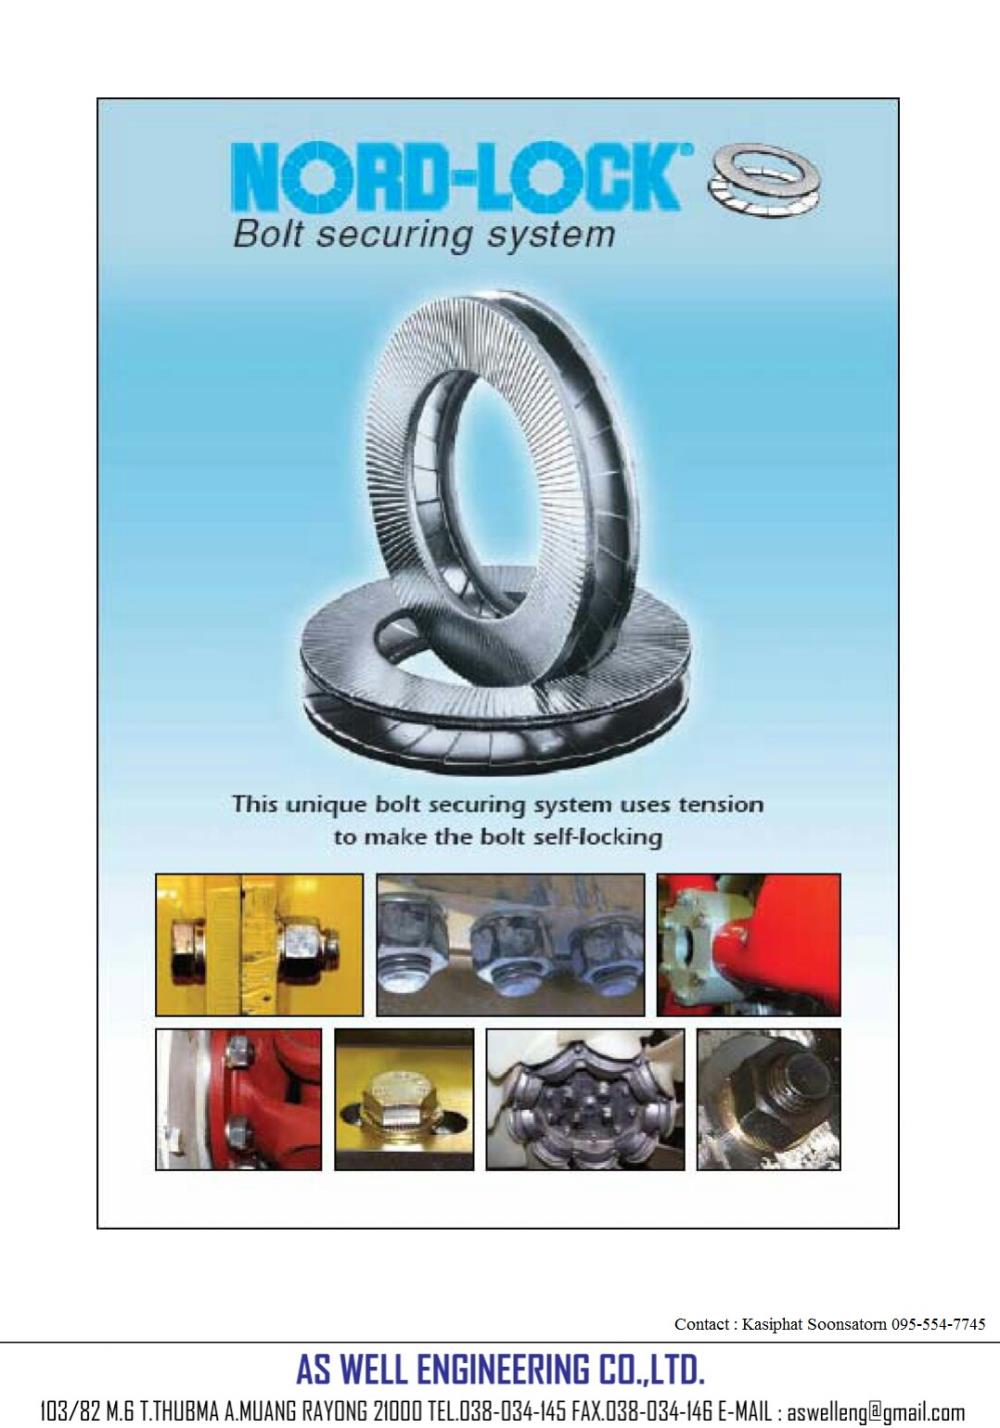 NORD-LOCK Bolt Securing System